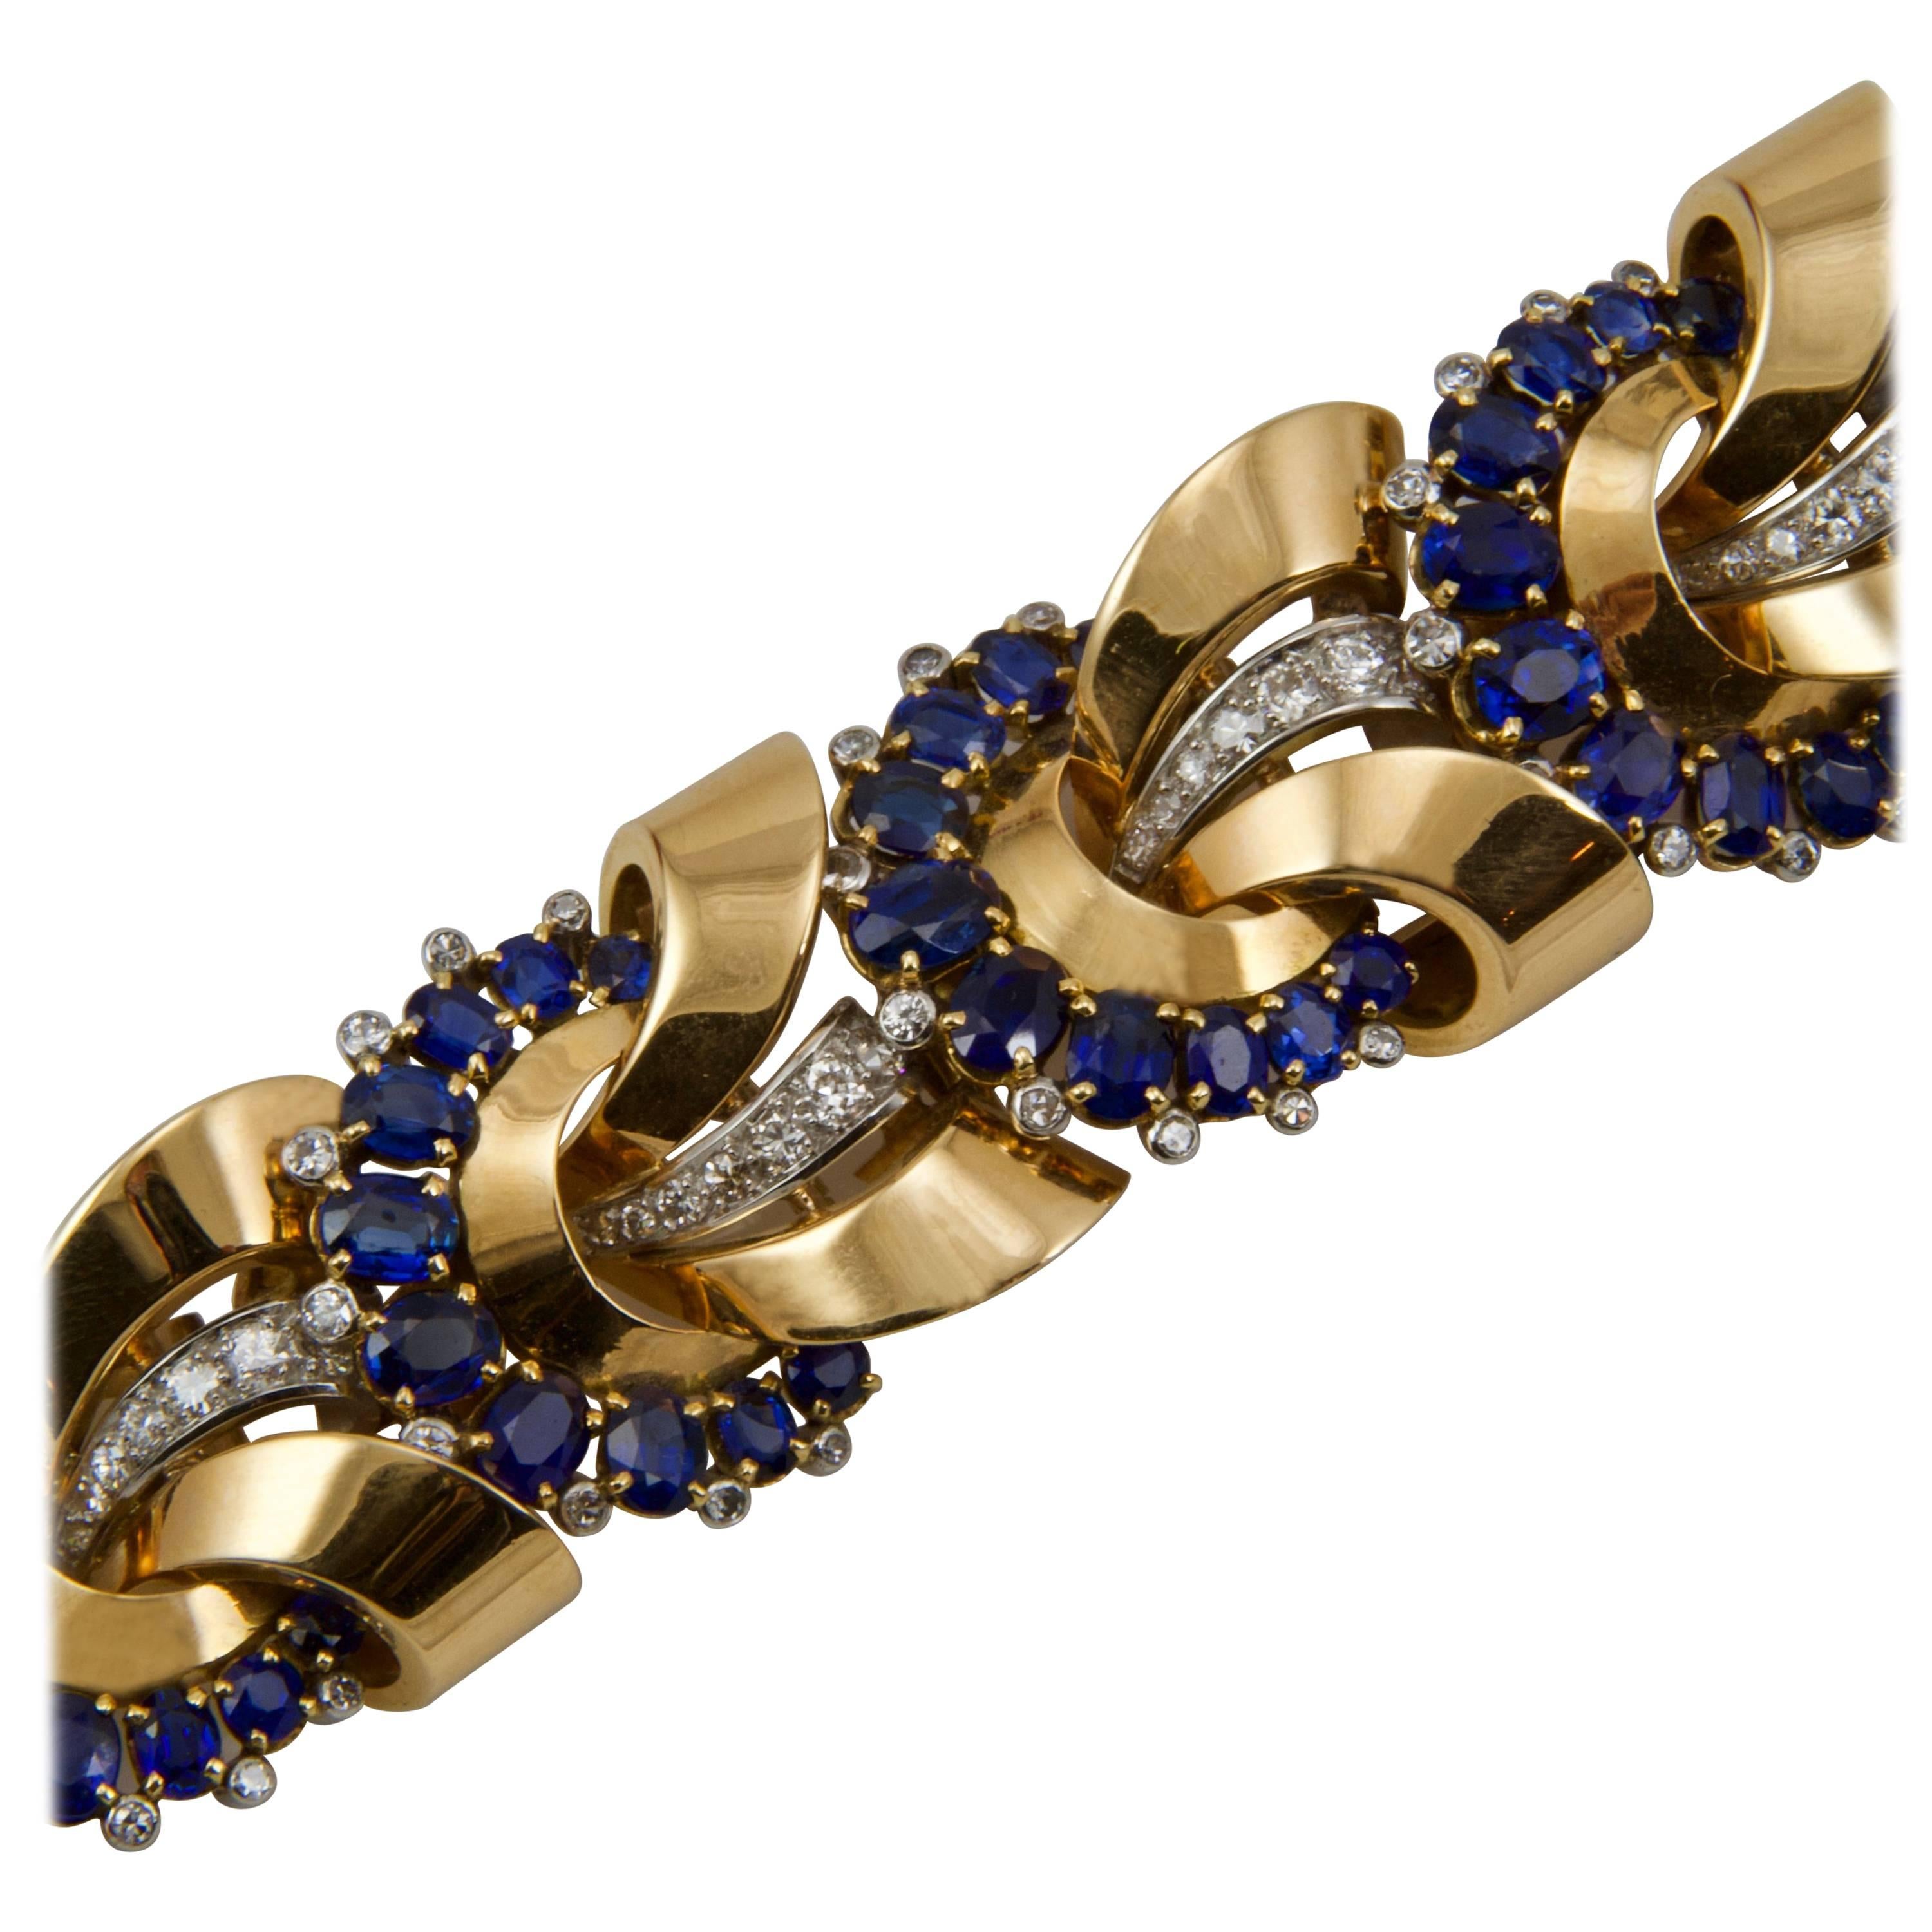  Yellow Gold Sapphires and Diamonds Bracelet circa 1950